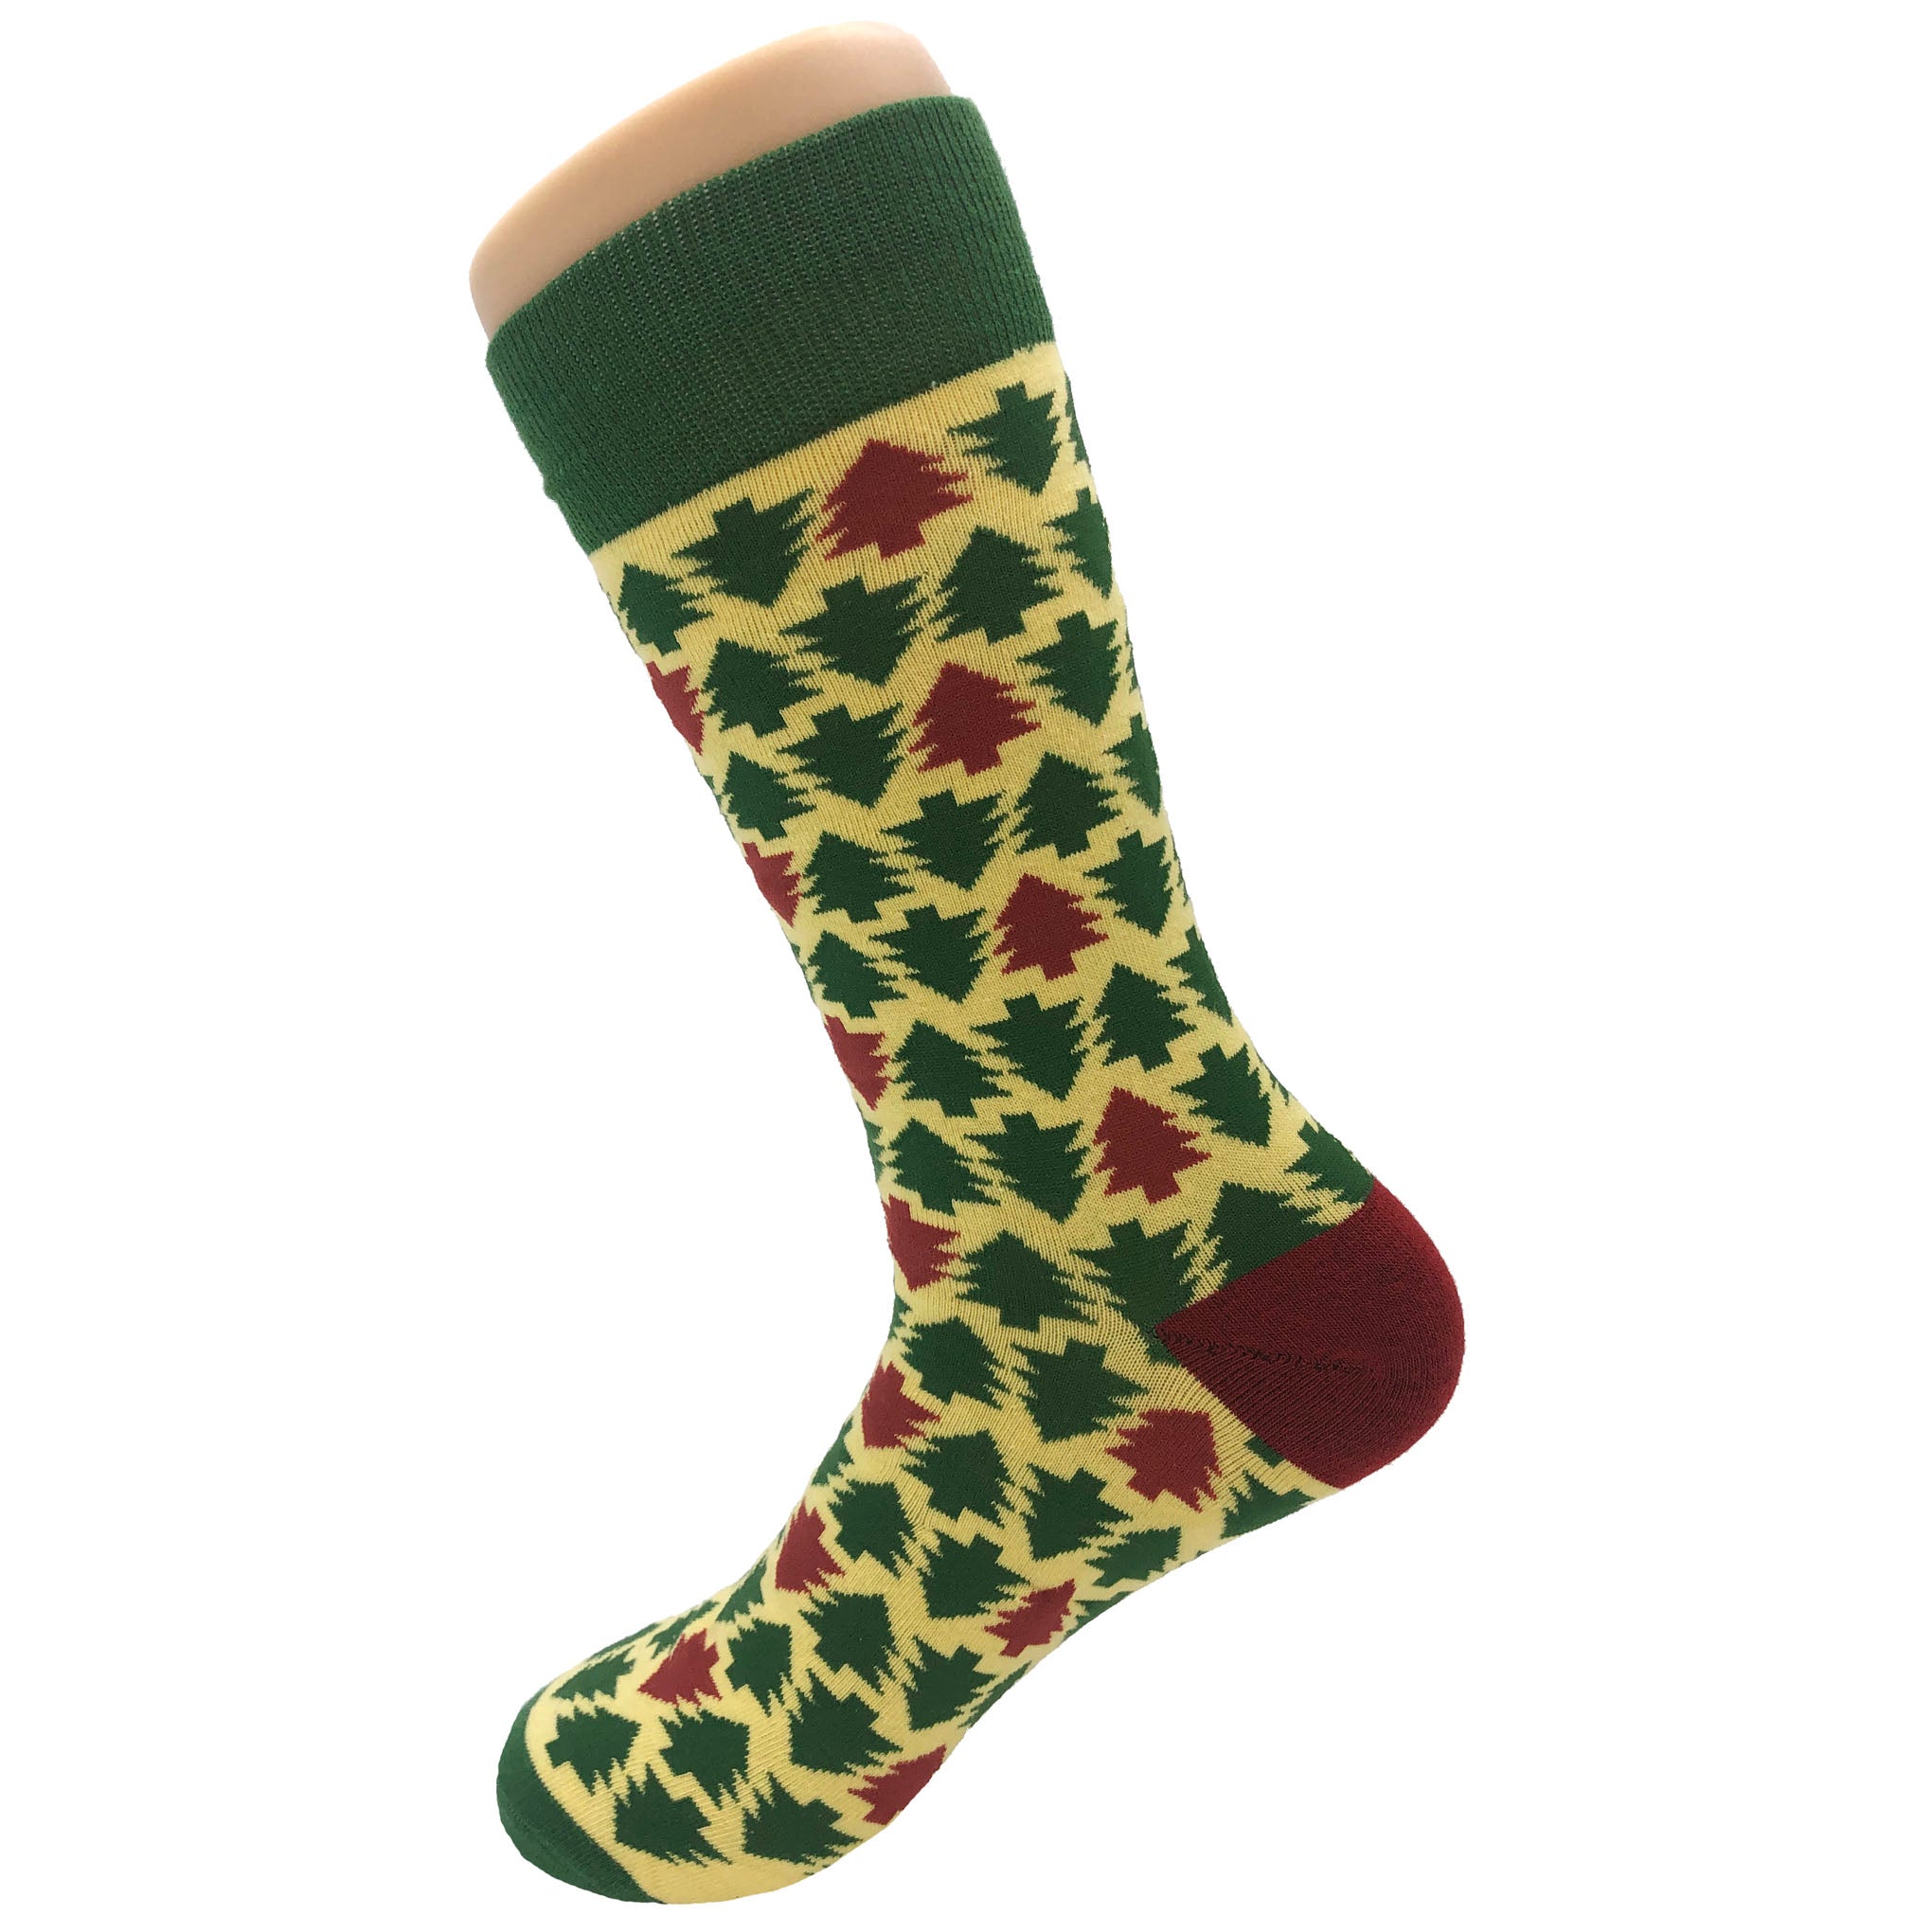 Christmas Tree Pattern Socks - Fun and Crazy Socks at Sockfly.com